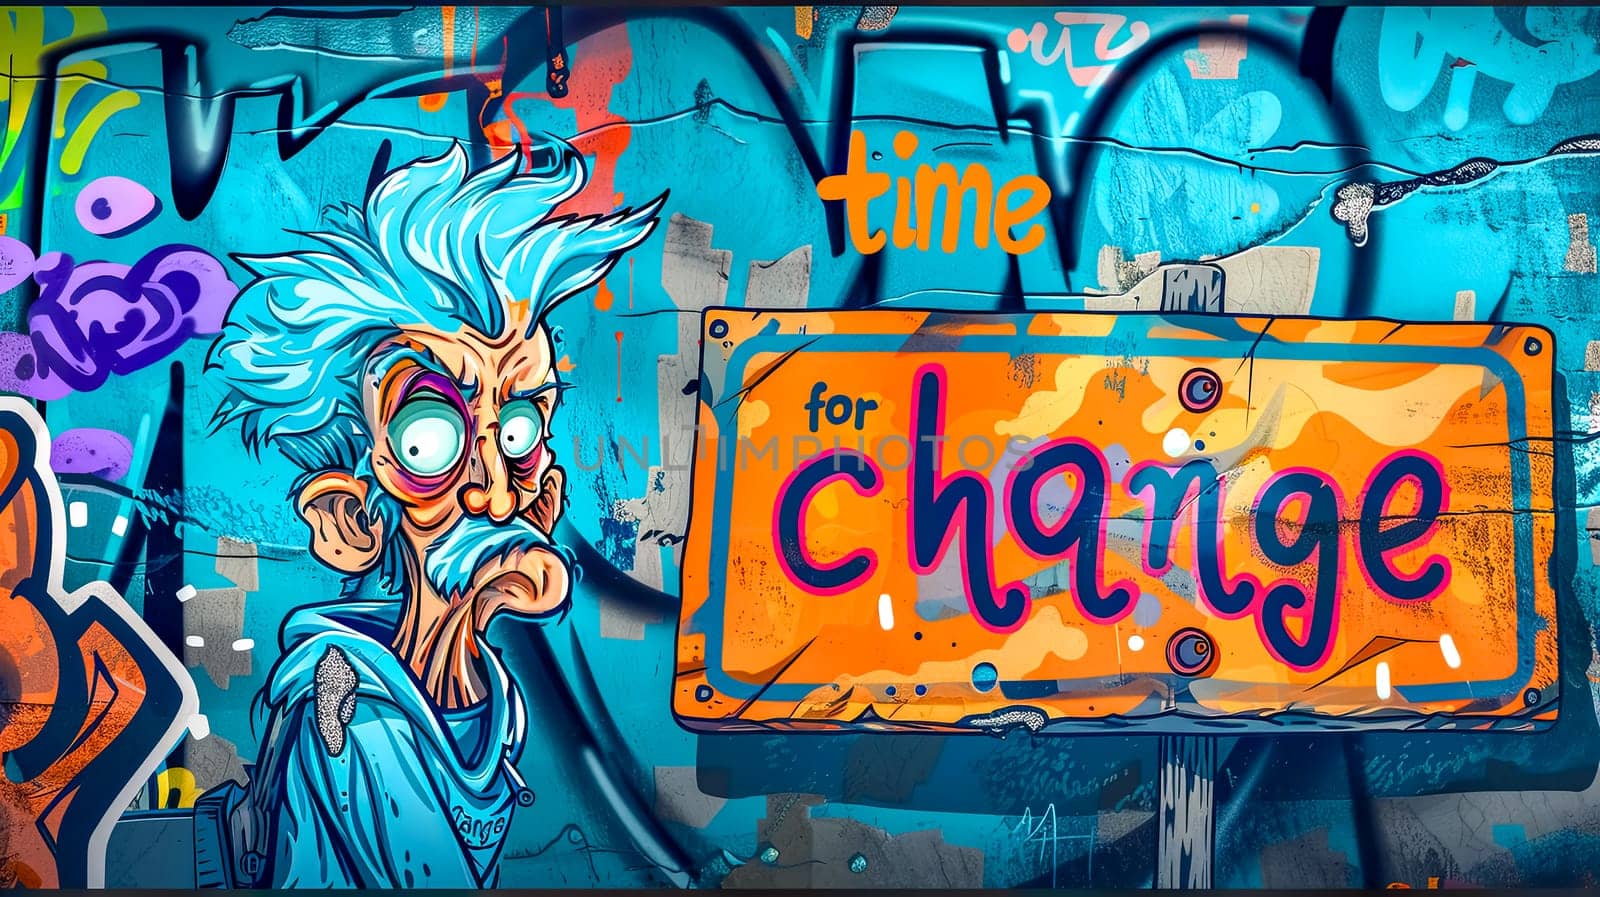 Eccentric scientist graffiti art and inspirational message by Edophoto